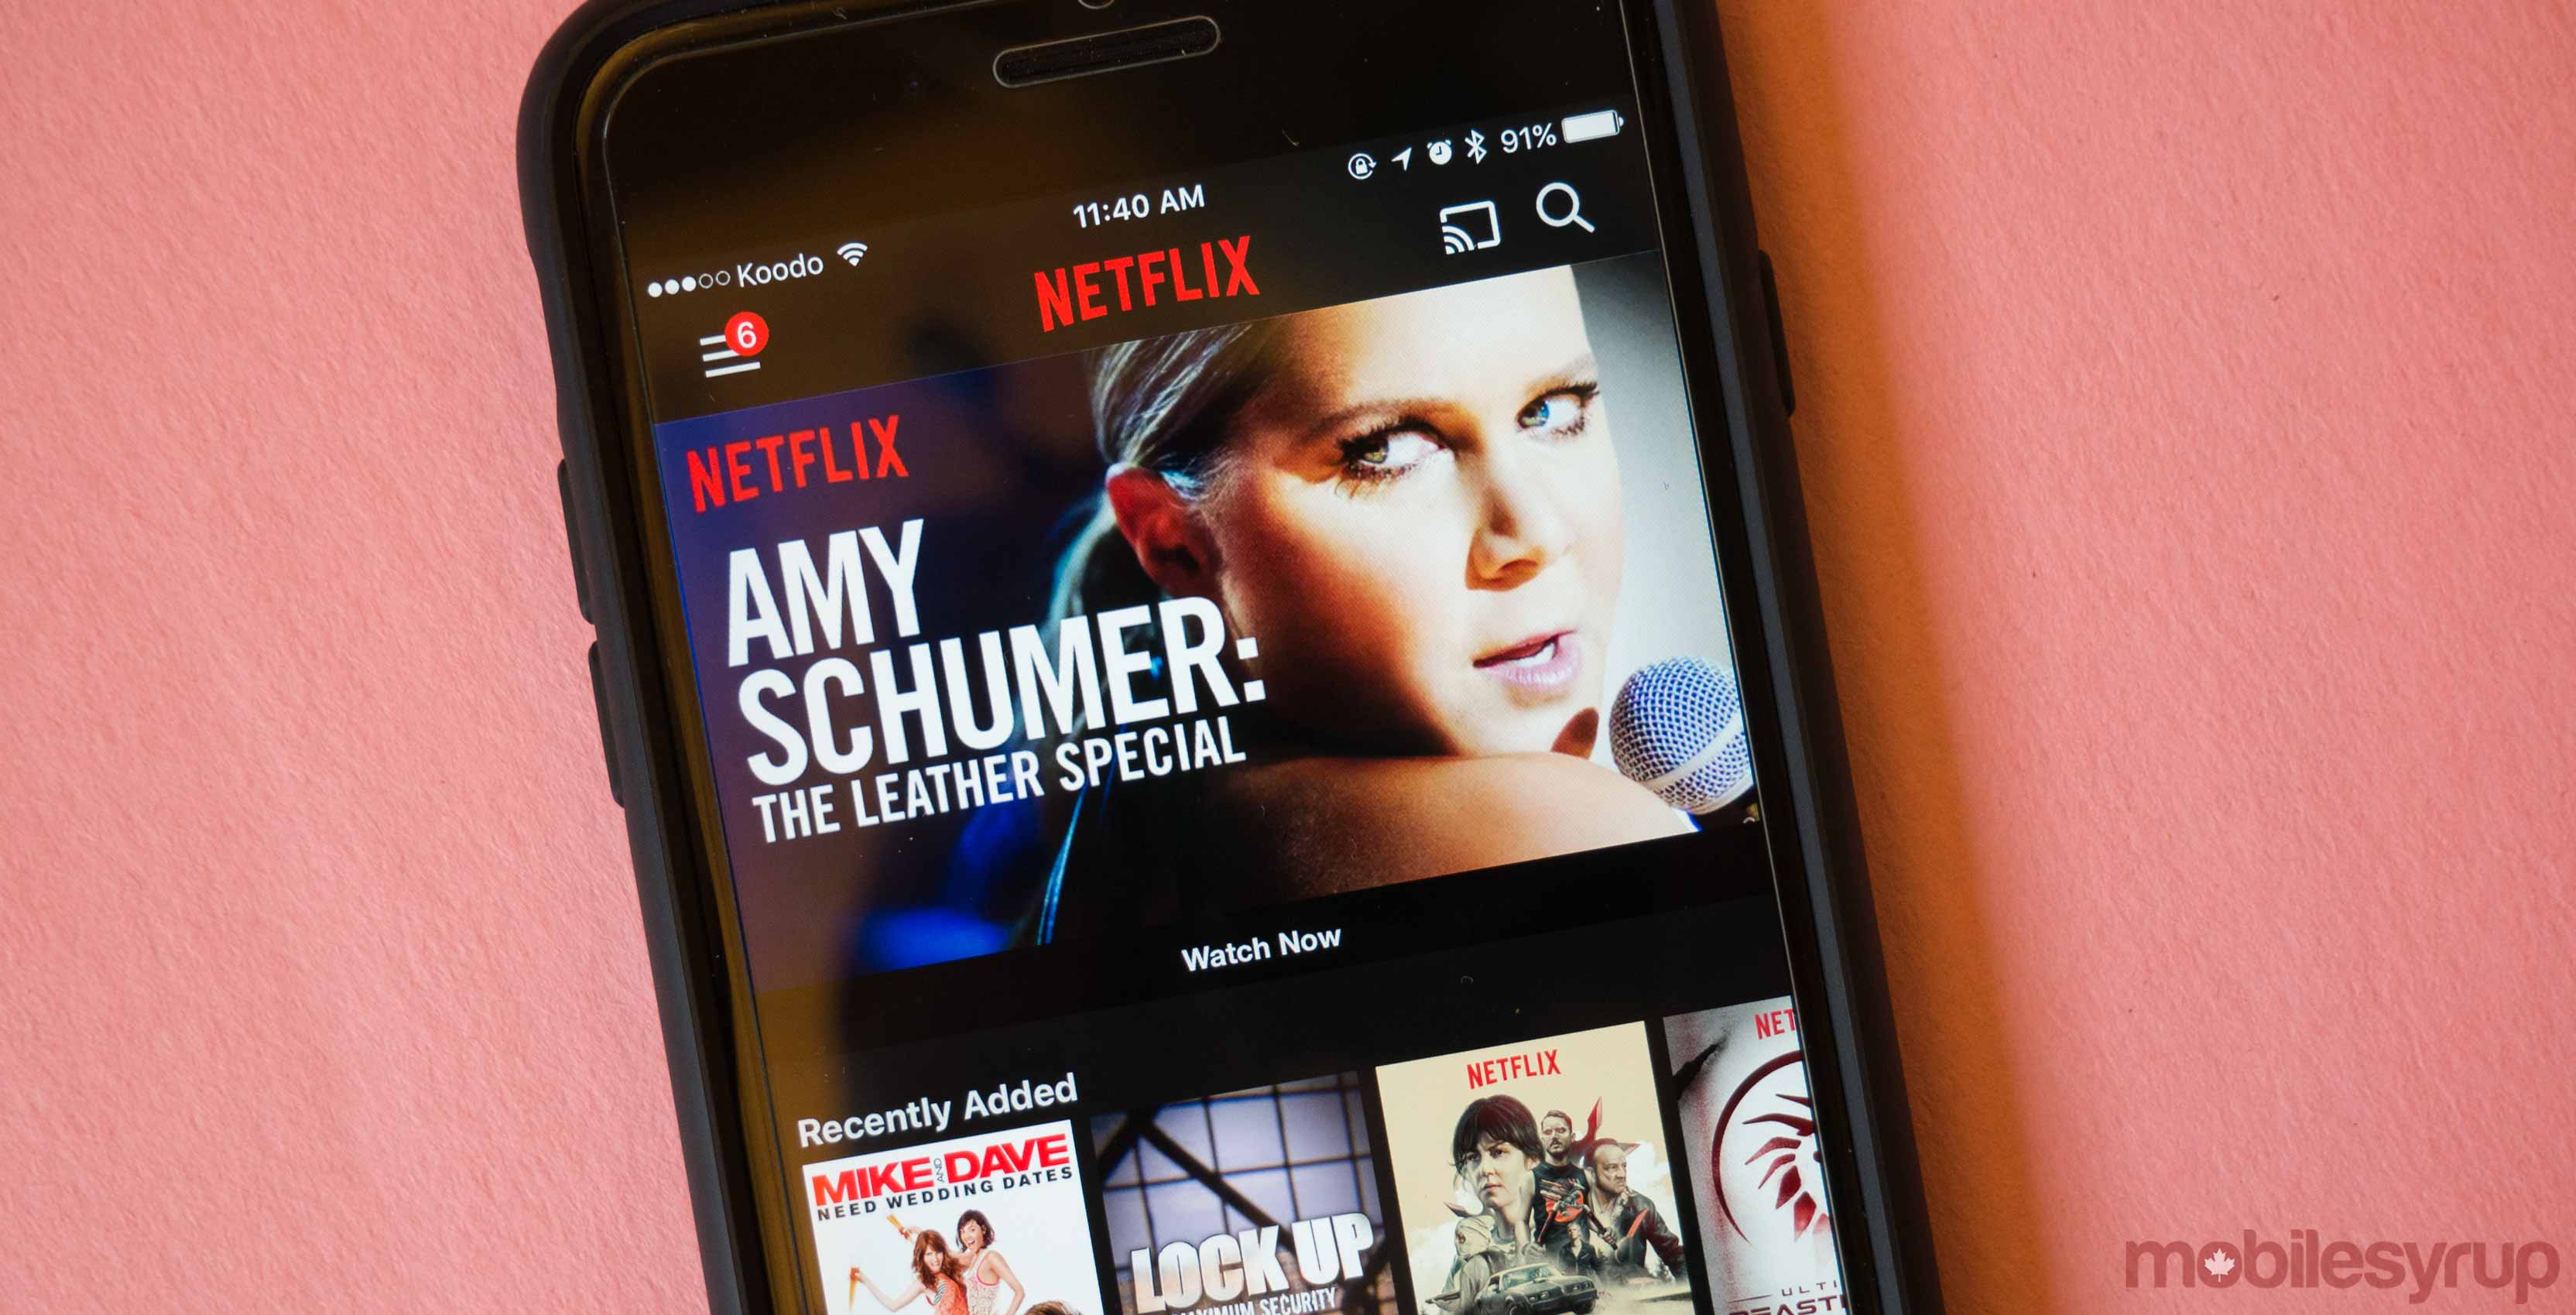 Netflix app on iPhone